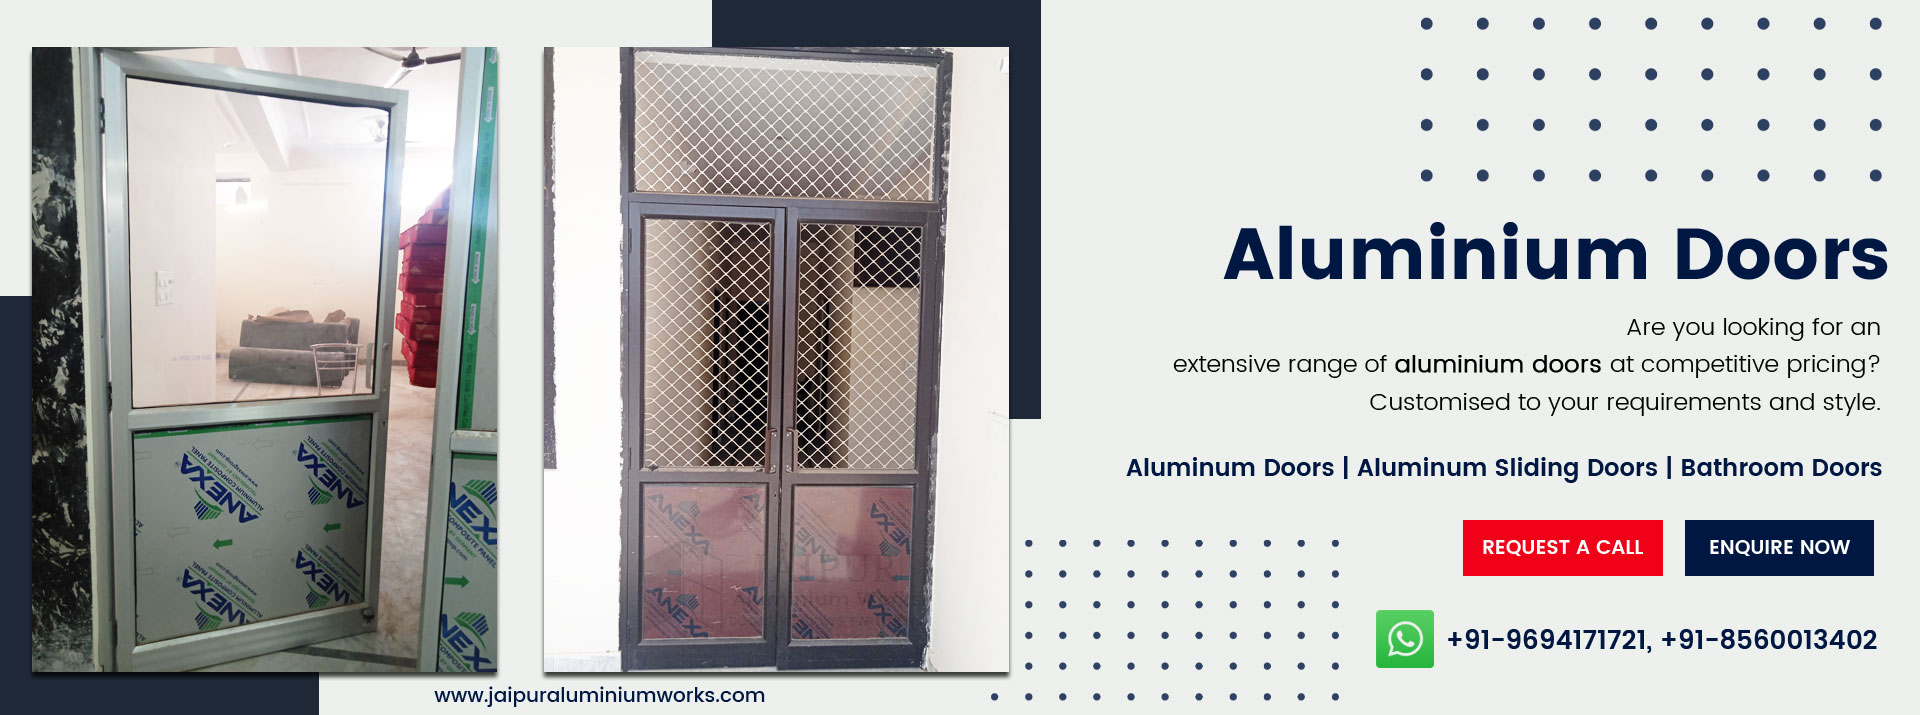 Aluminium Doors - Jaipur Aluminium Works